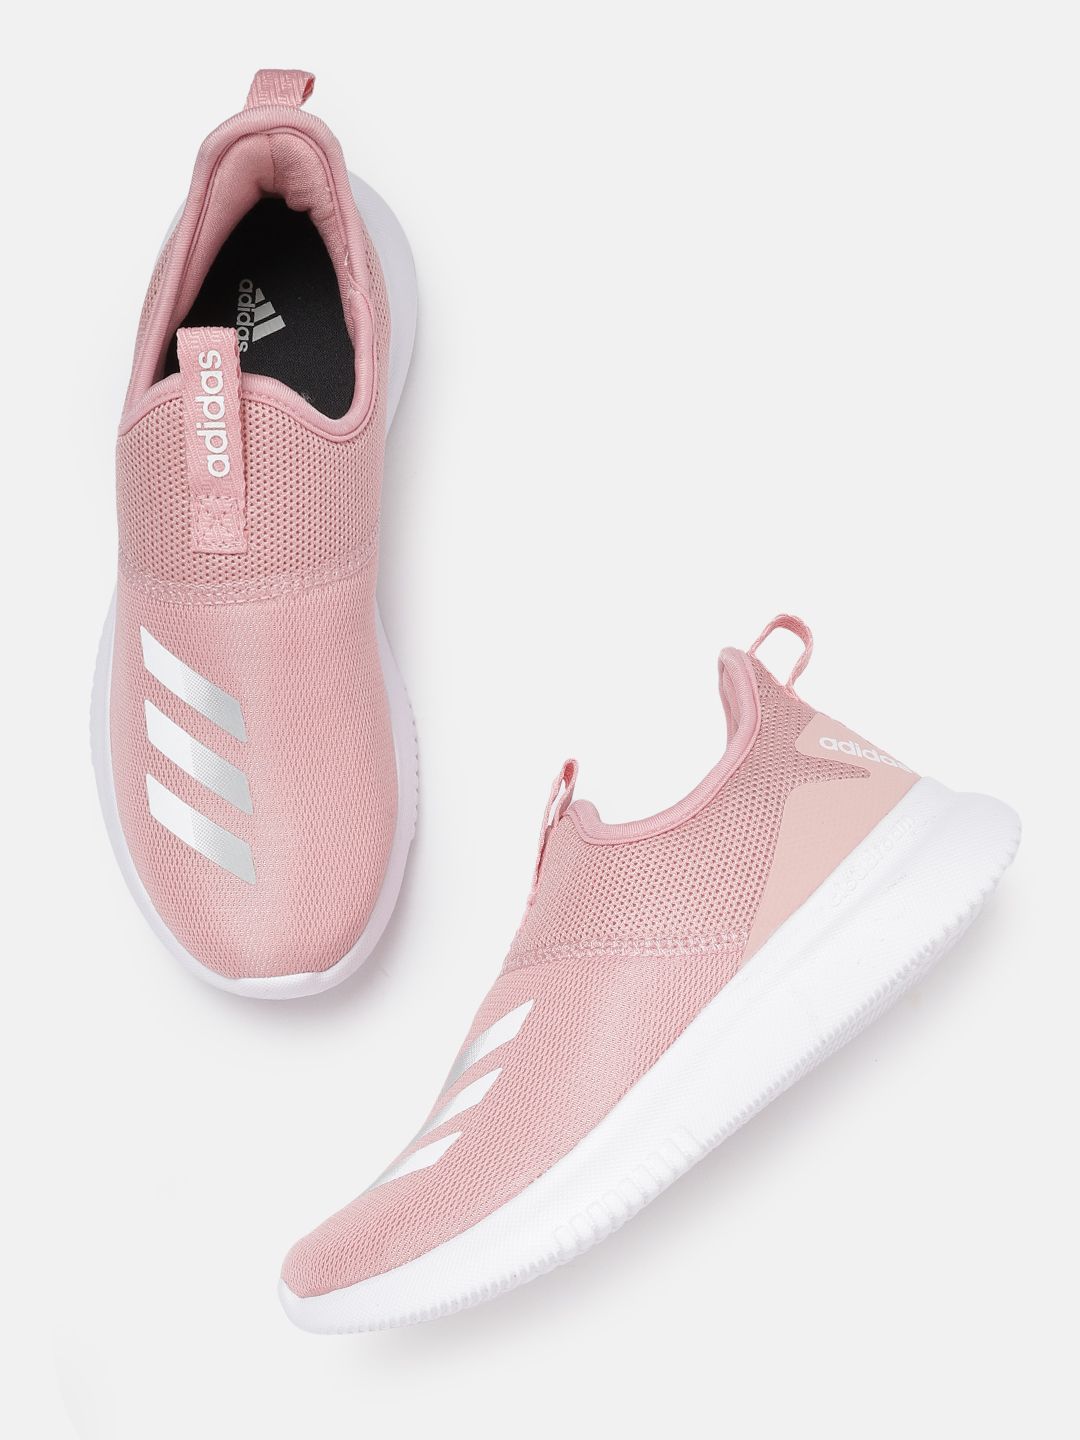 ADIDAS Women Pink & White Woven Design SheenWalk Shoes Price in India